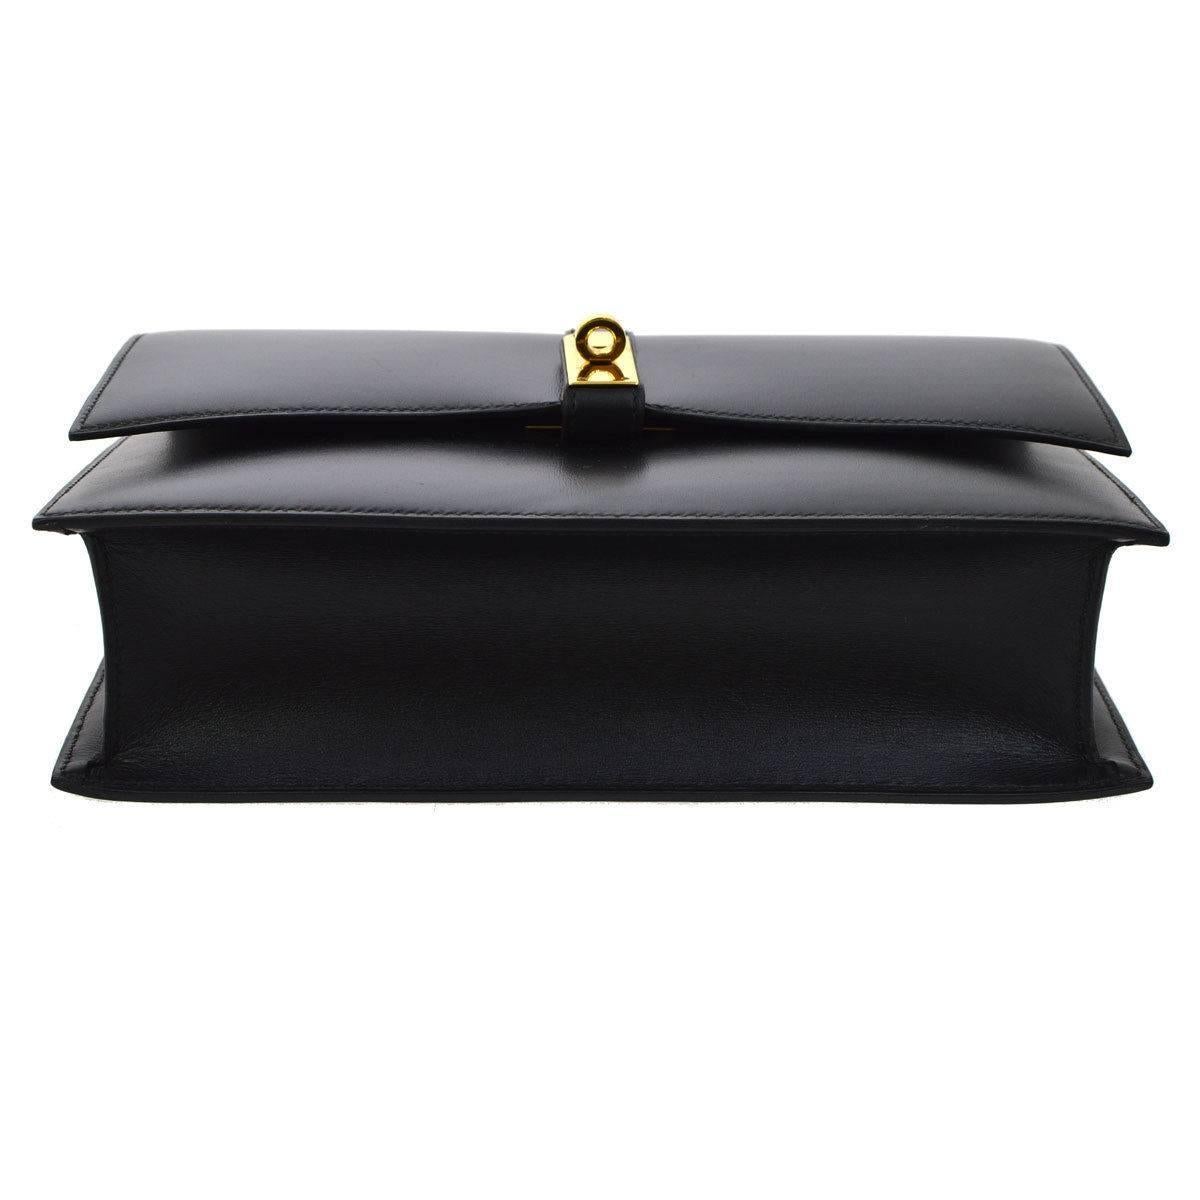 Women's Hermes Black Leather Gold Kelly Style Flip Lock Top Handle Satchel Bag in Box